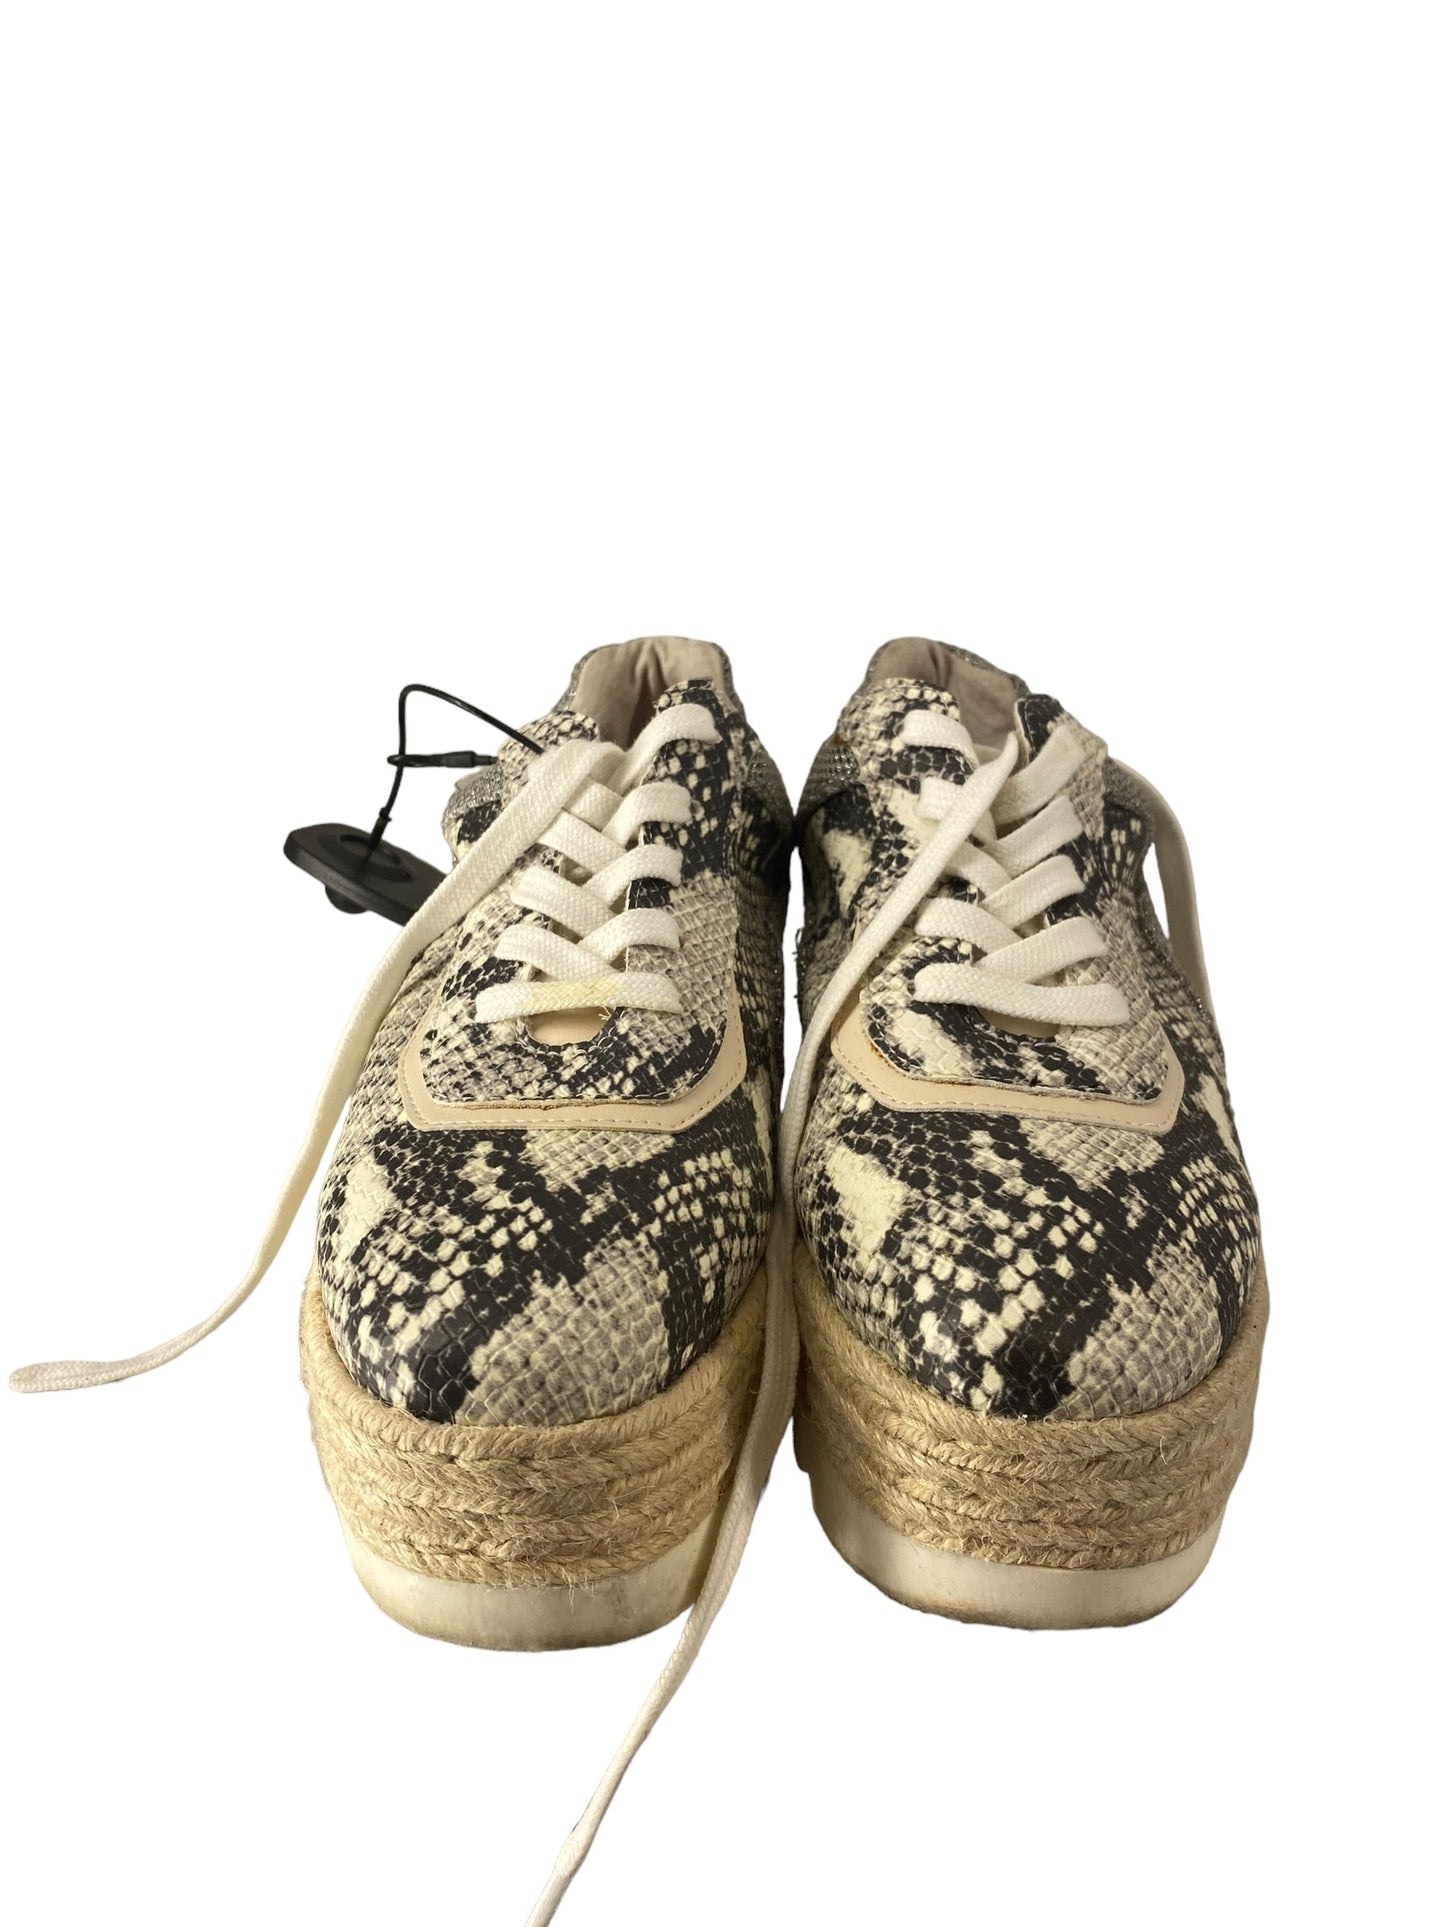 Snakeskin Print Shoes Sneakers Platform Steve Madden, Size 8.5